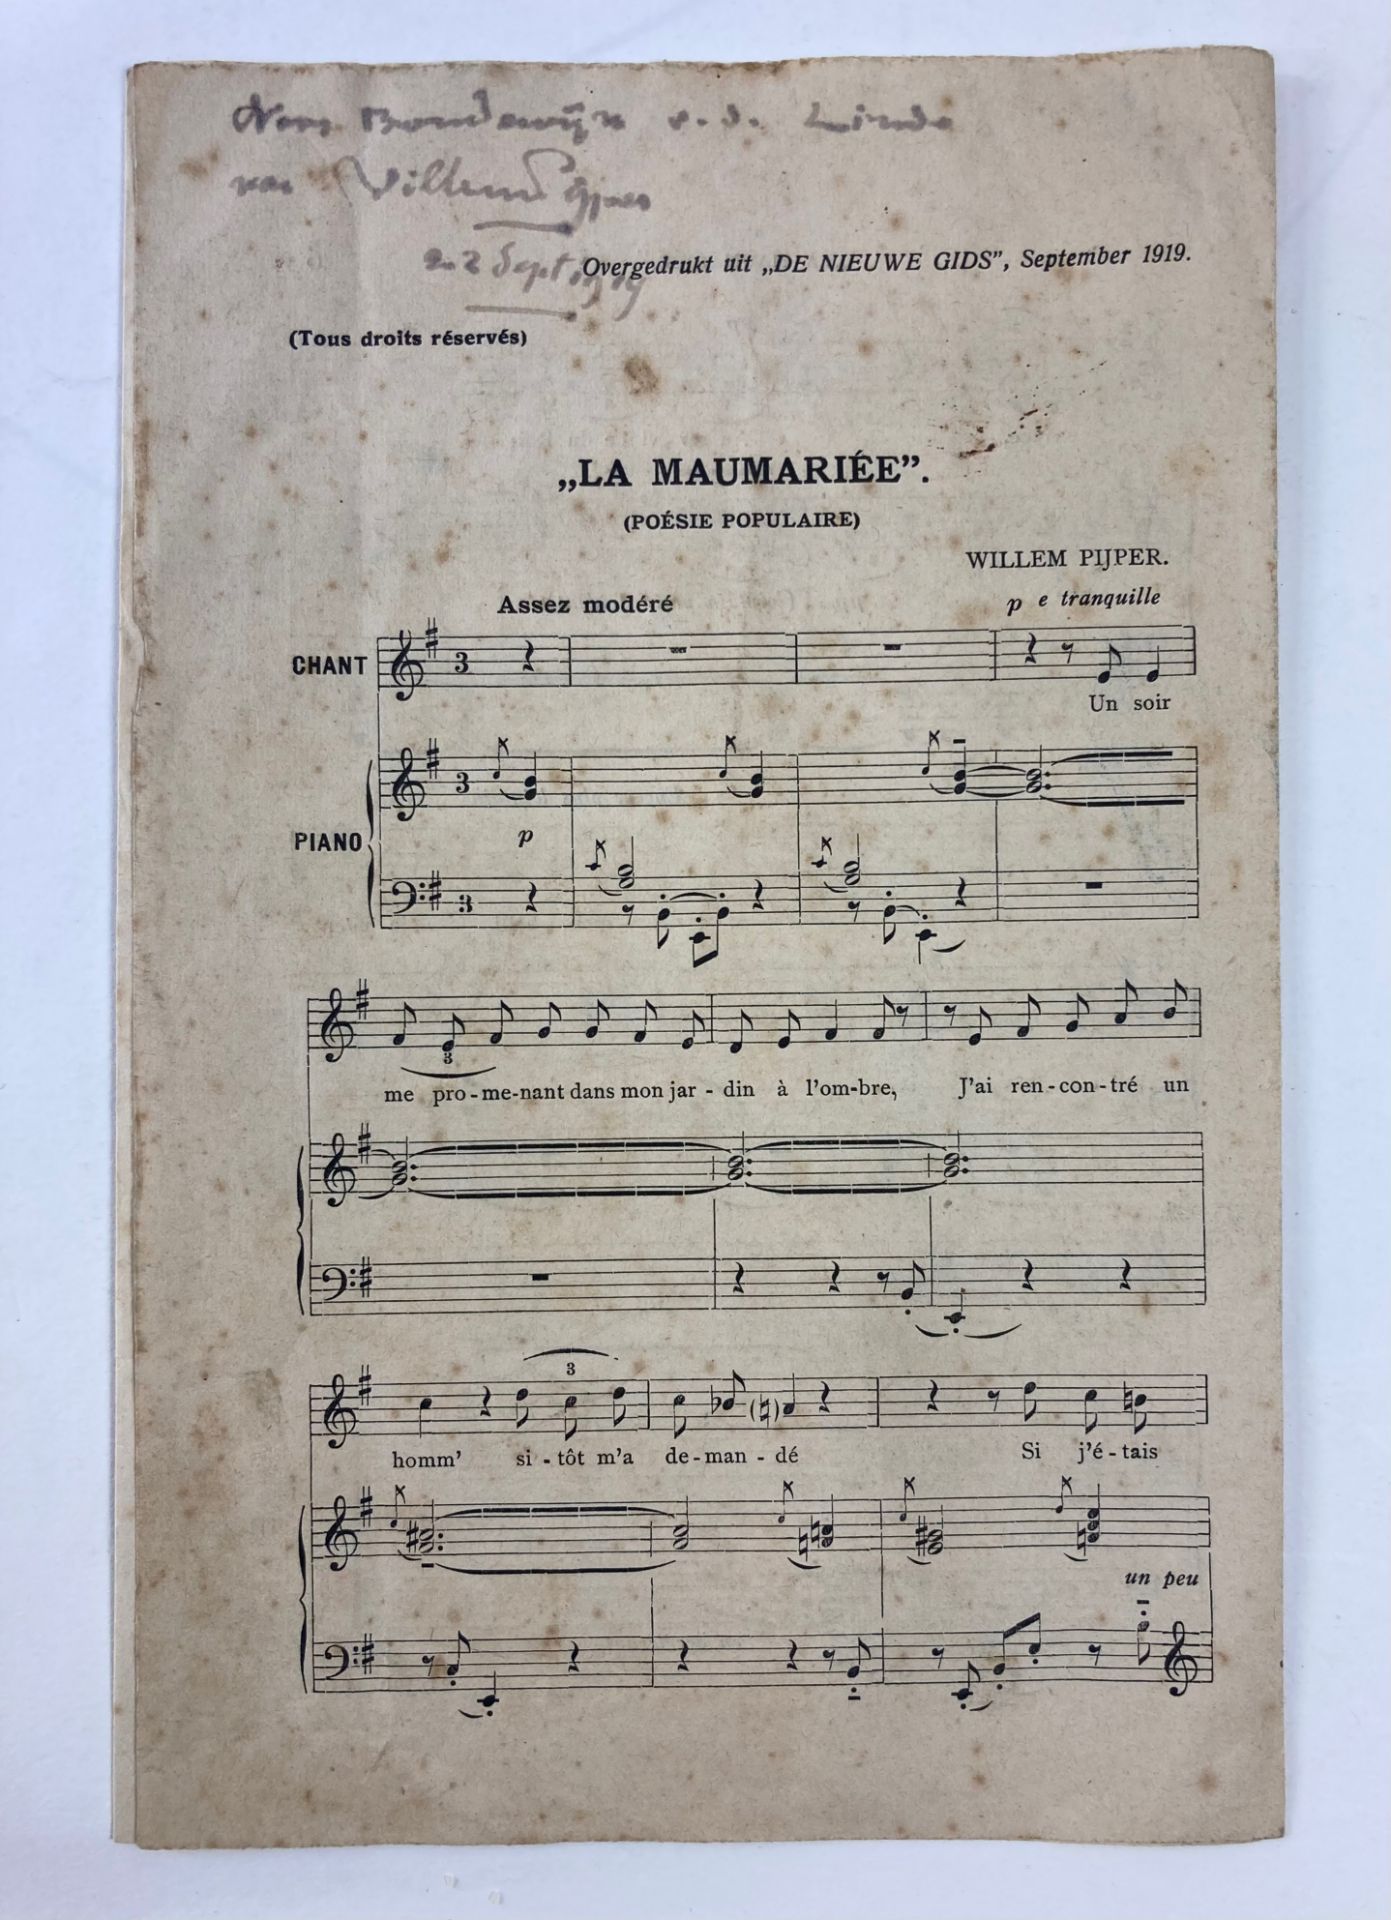 PIJPER, Willem (1894-1947), Dutch composer. Off-print of a composition/score for